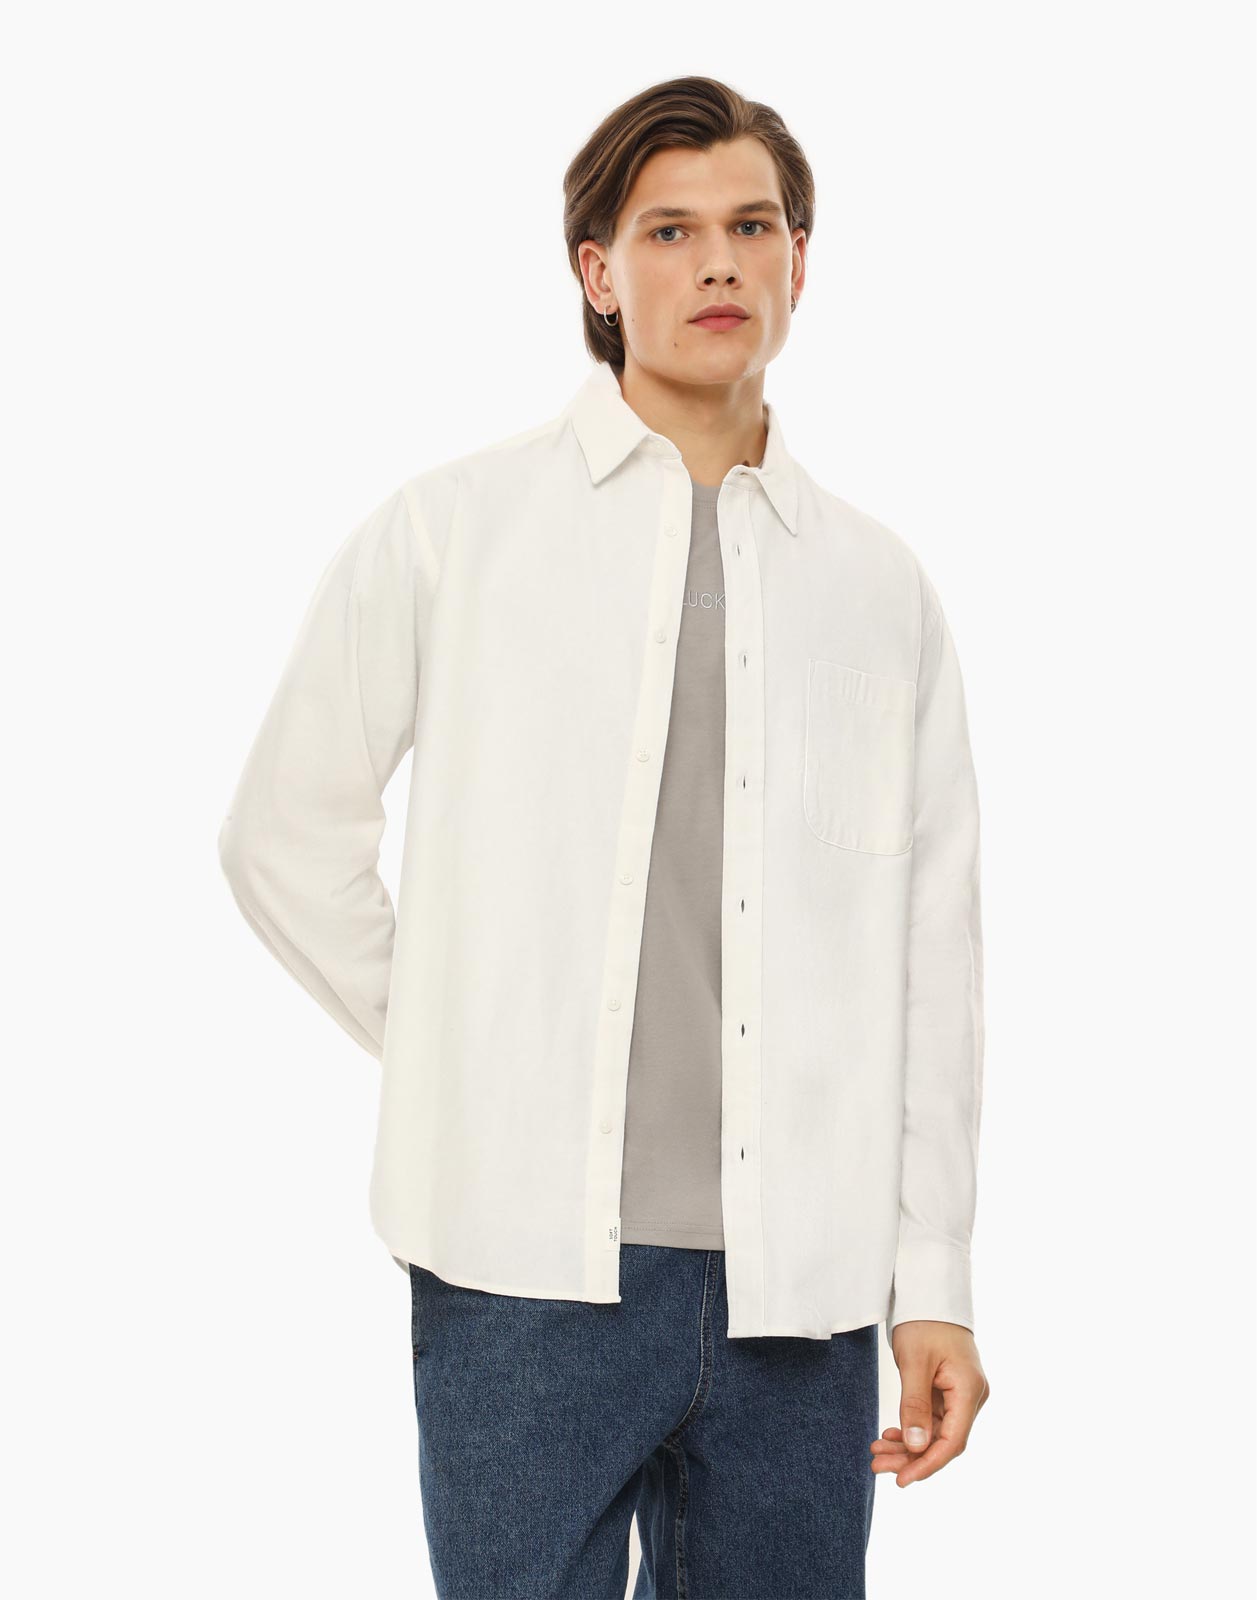 Рубашка мужская Gloria Jeans BWT001370 белая XS (40-42)